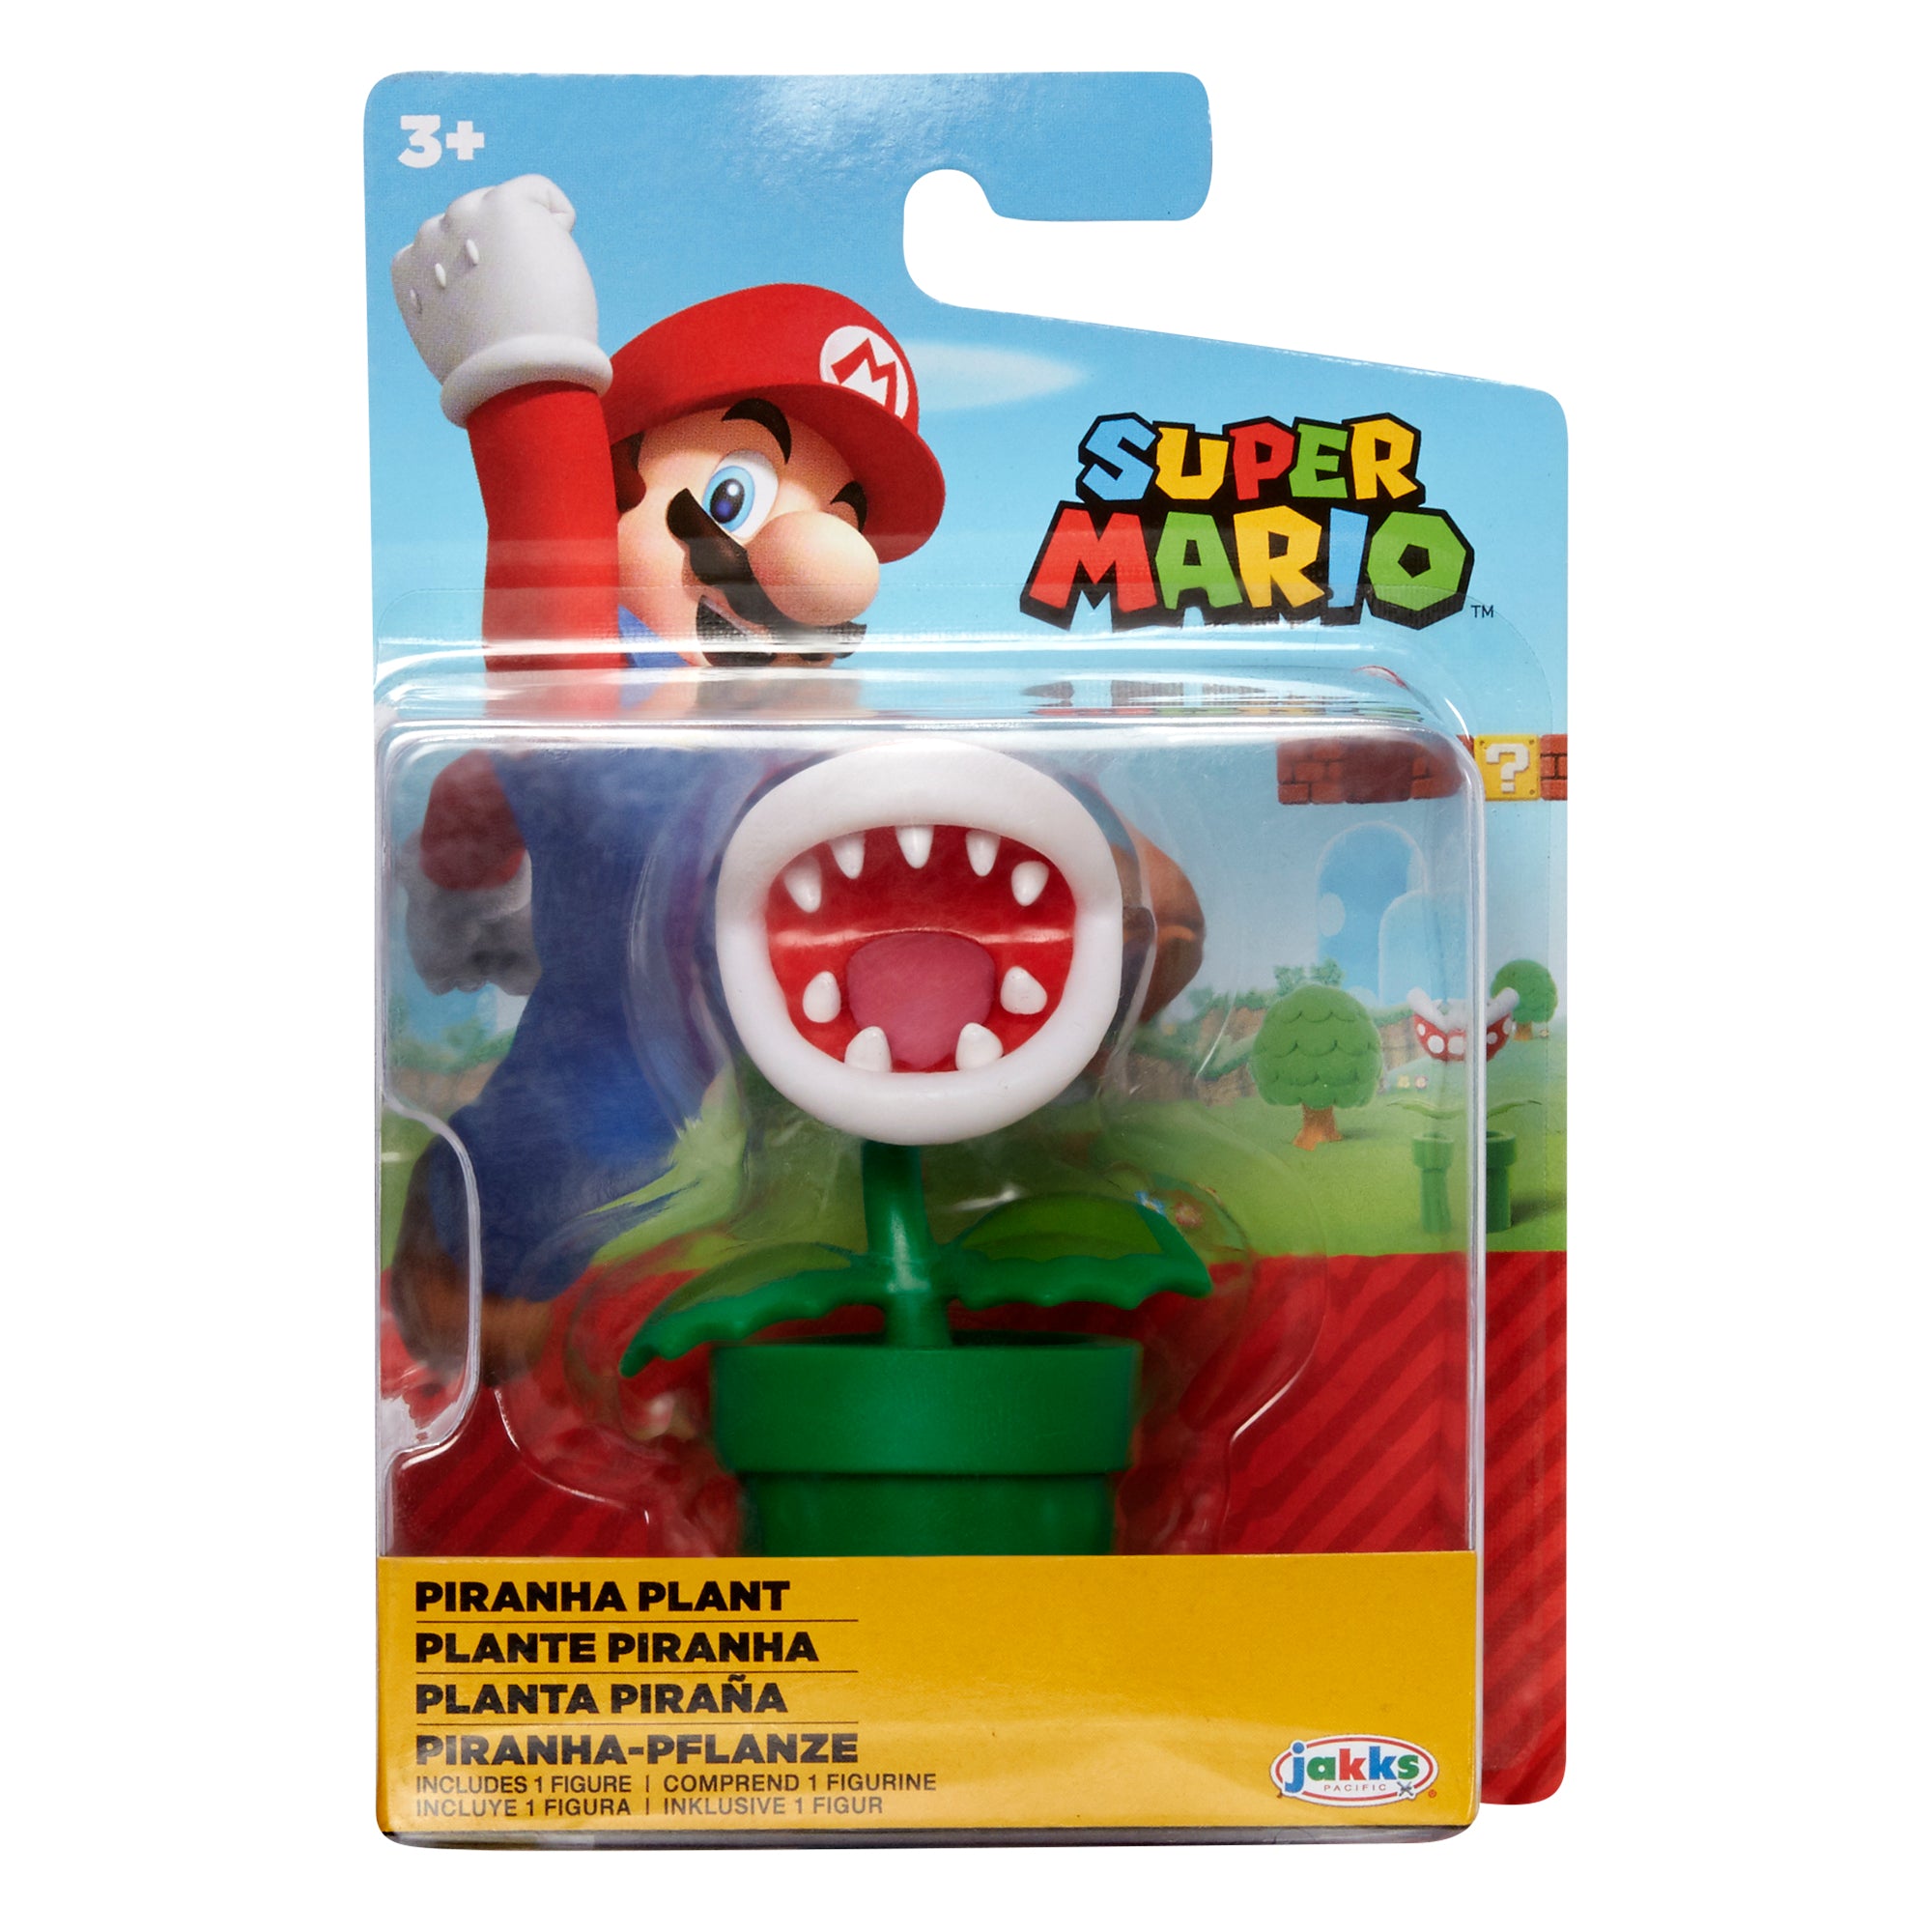 World of Nintendo Super Mario Product Showcase